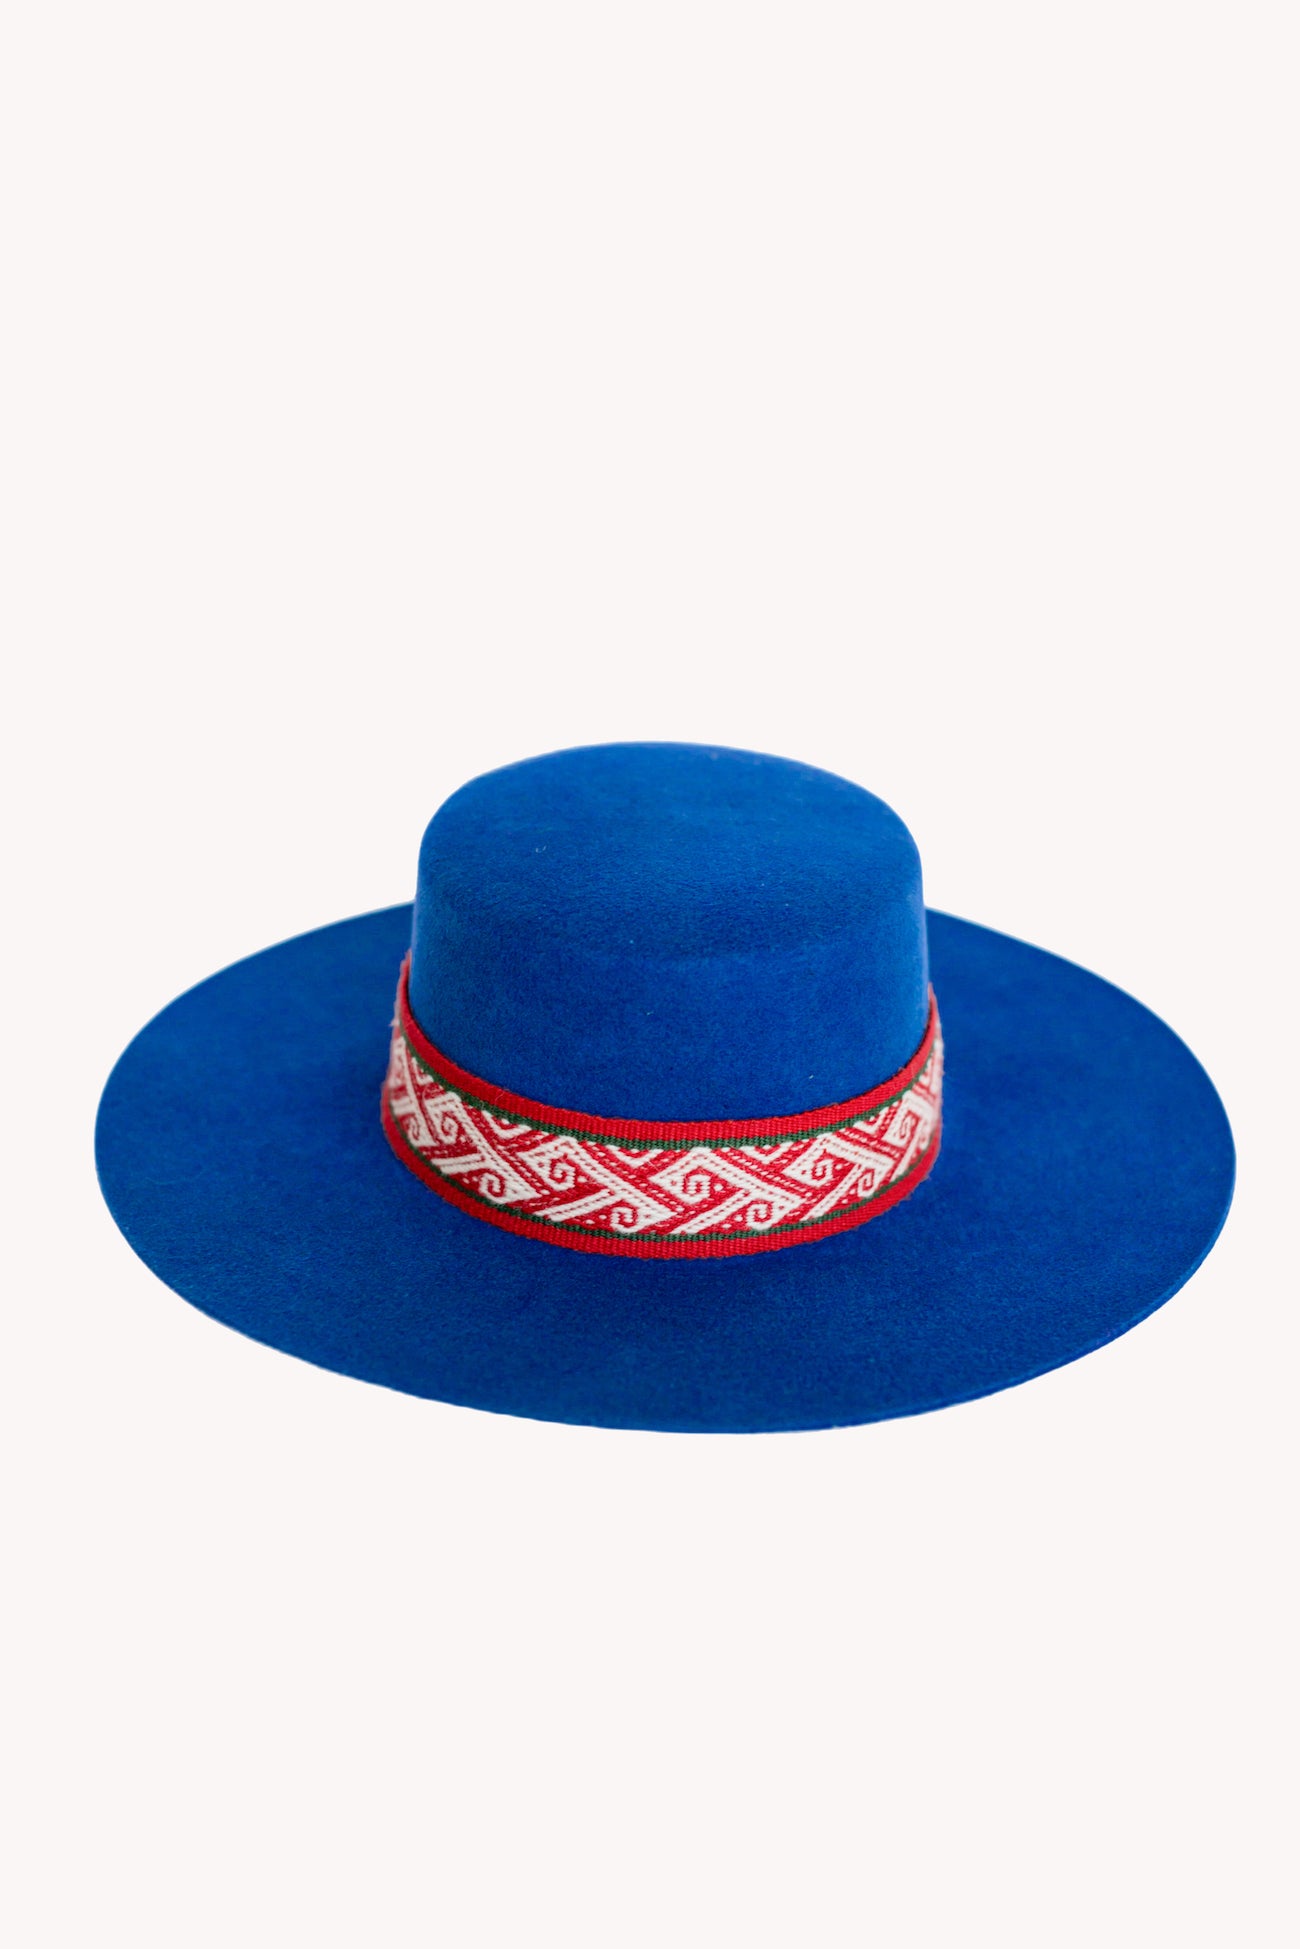 Blue Spanish style alpaca wool flat top hat